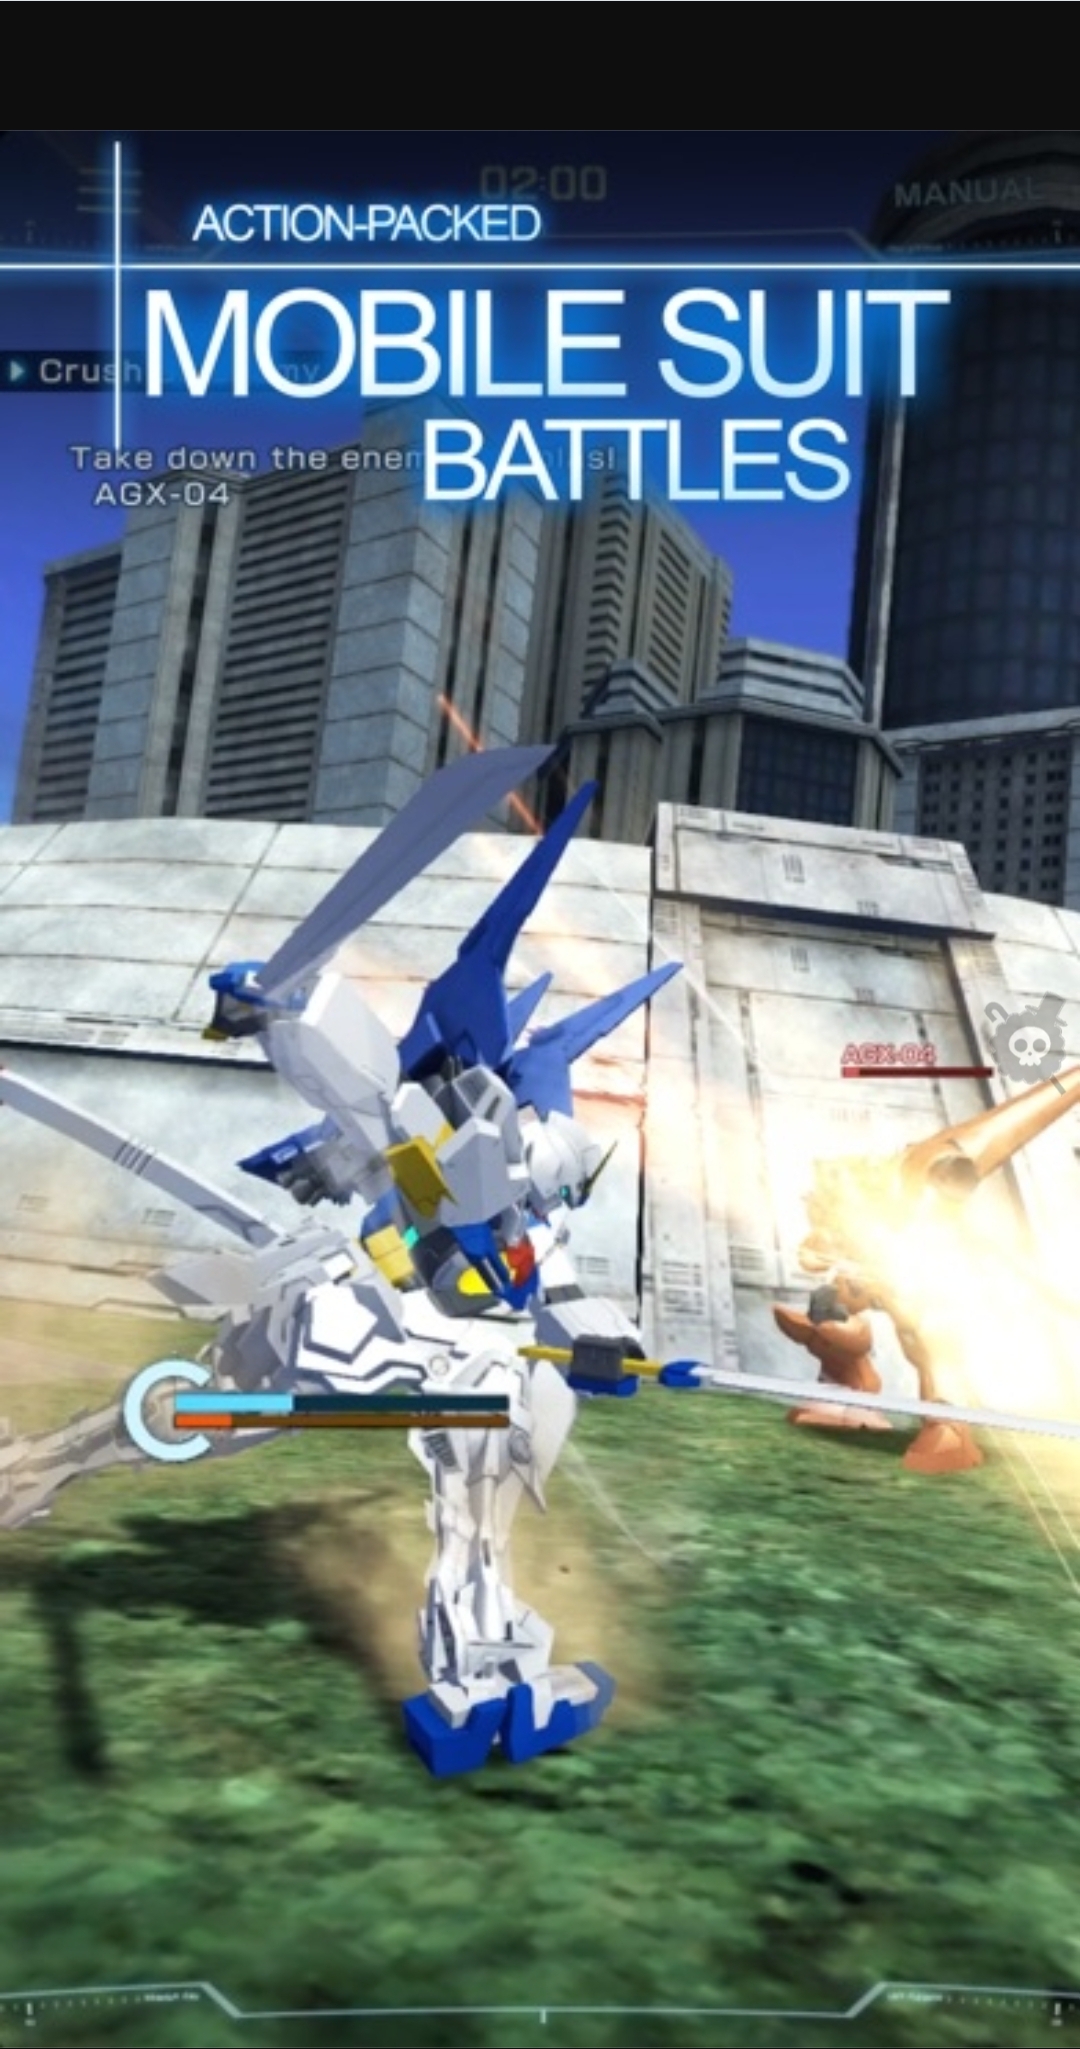 Gundam Mobile Suit Battles game for iOS